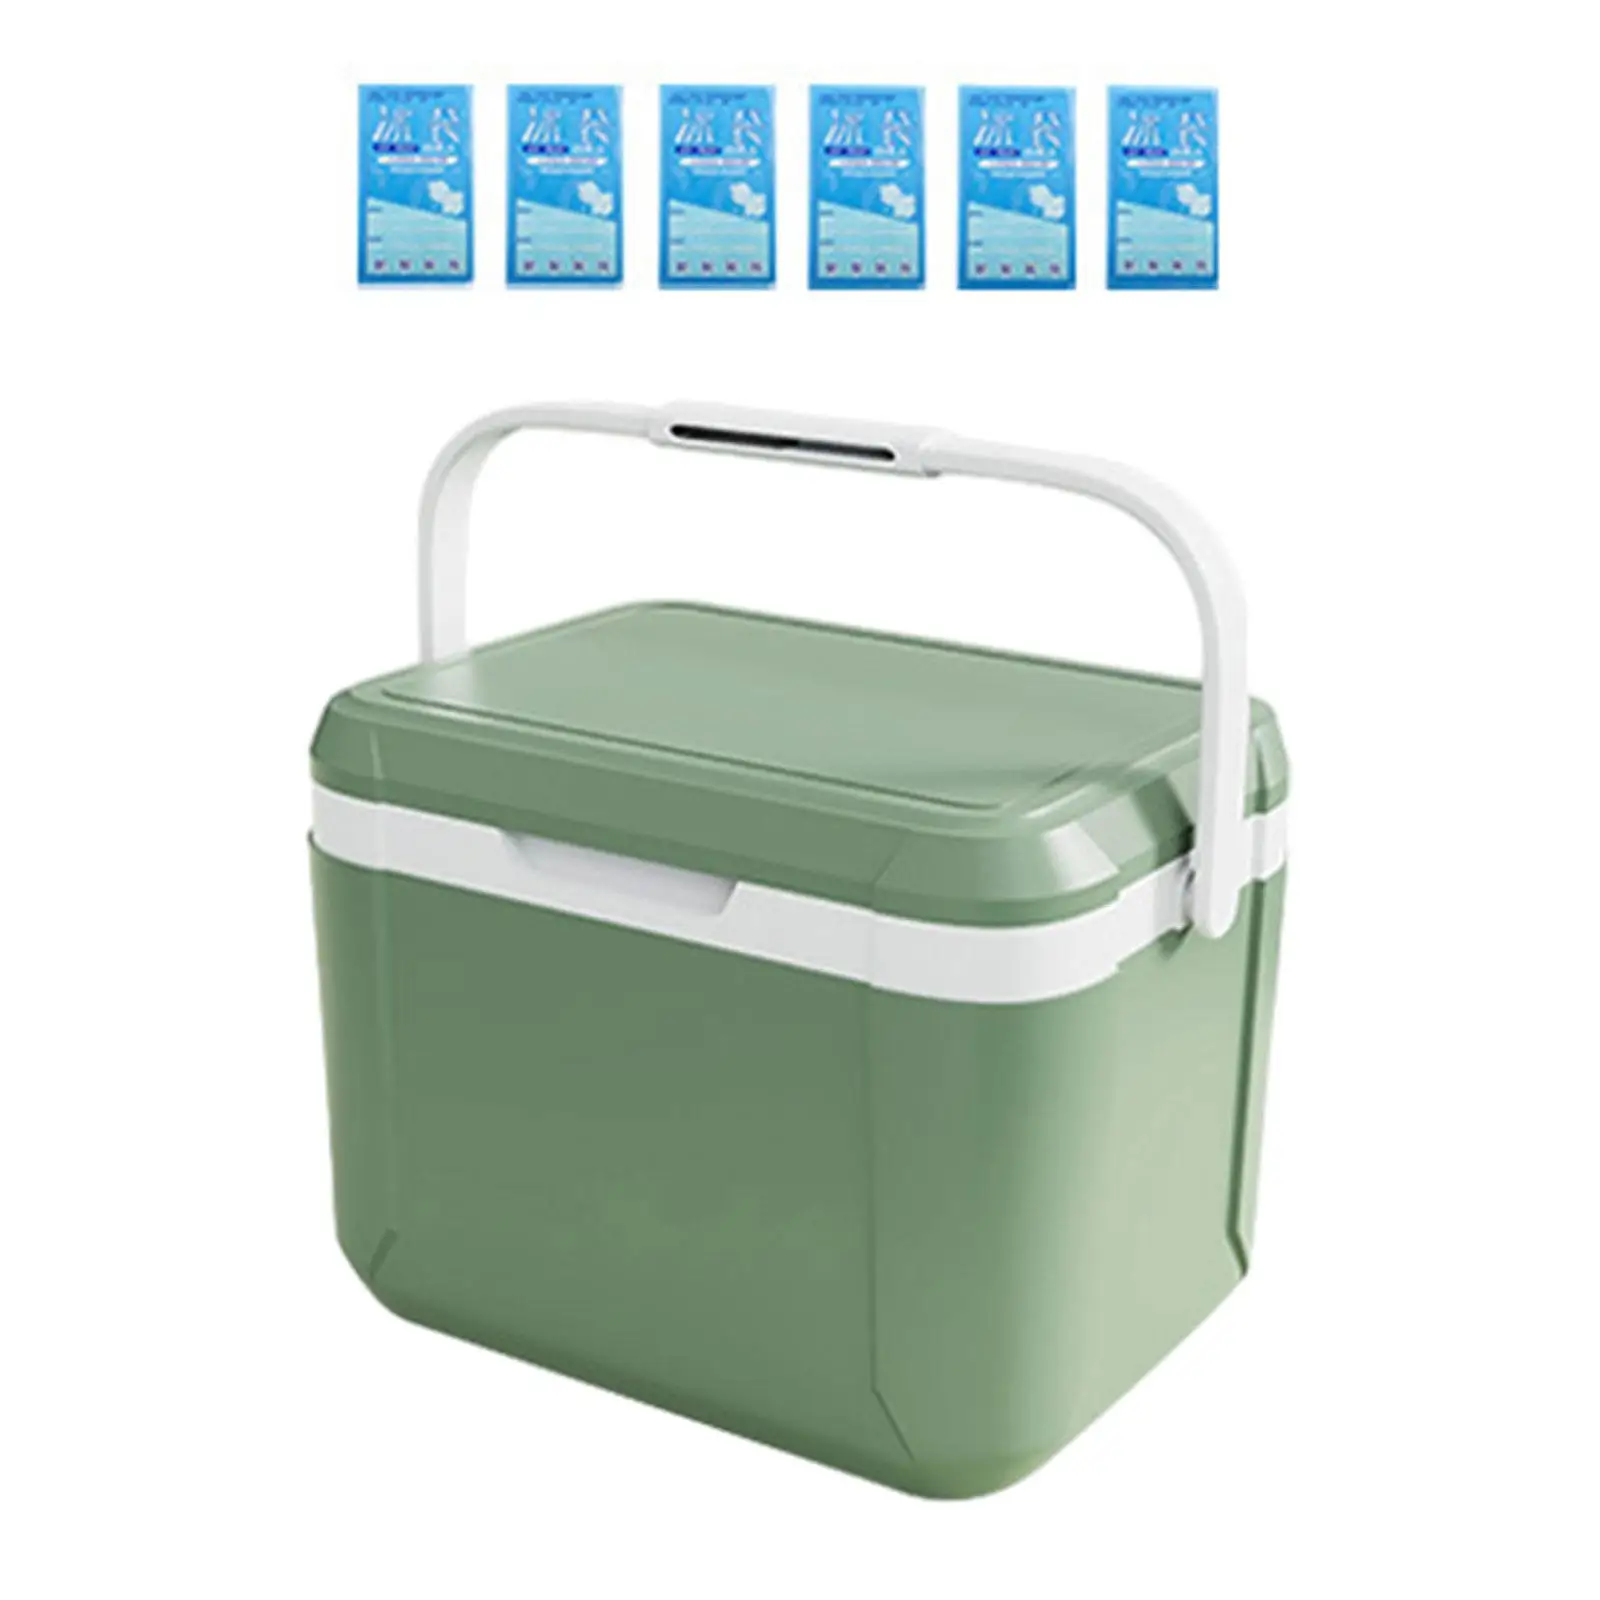 Cooler Box Car Refrigerator 5L Beverage Storage Organizer Ice Bucket Hot/Cold Retention Cooler Hard Cooler for Camping Picnic